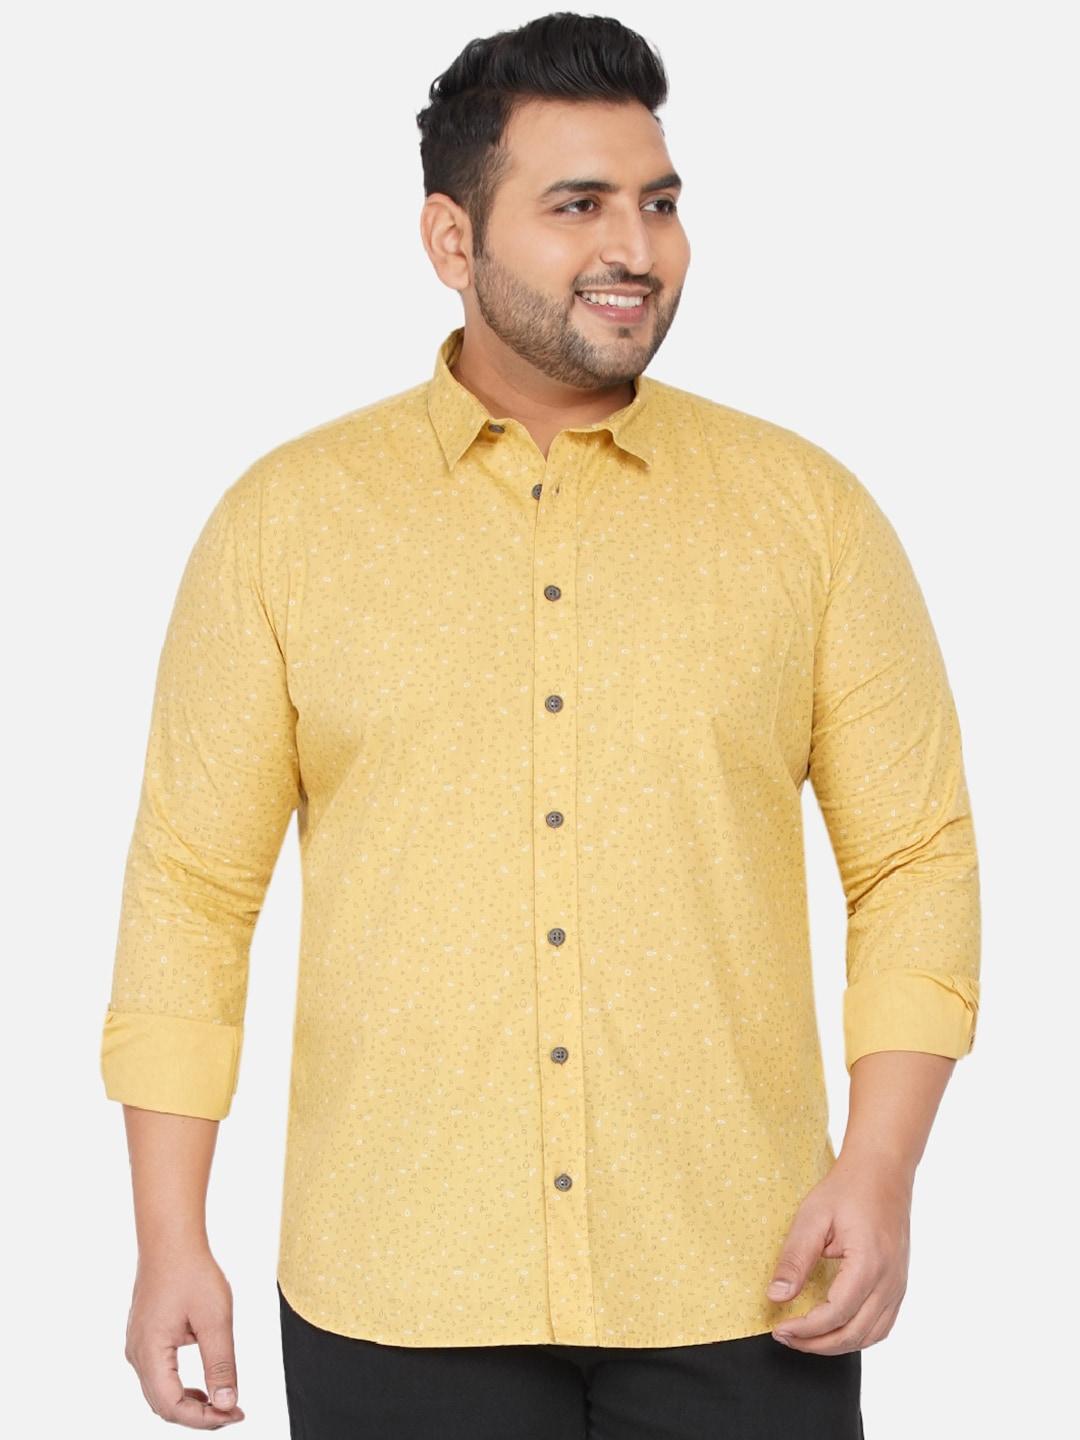 john pride men plus size yellow & white printed cotton plus size casual shirt